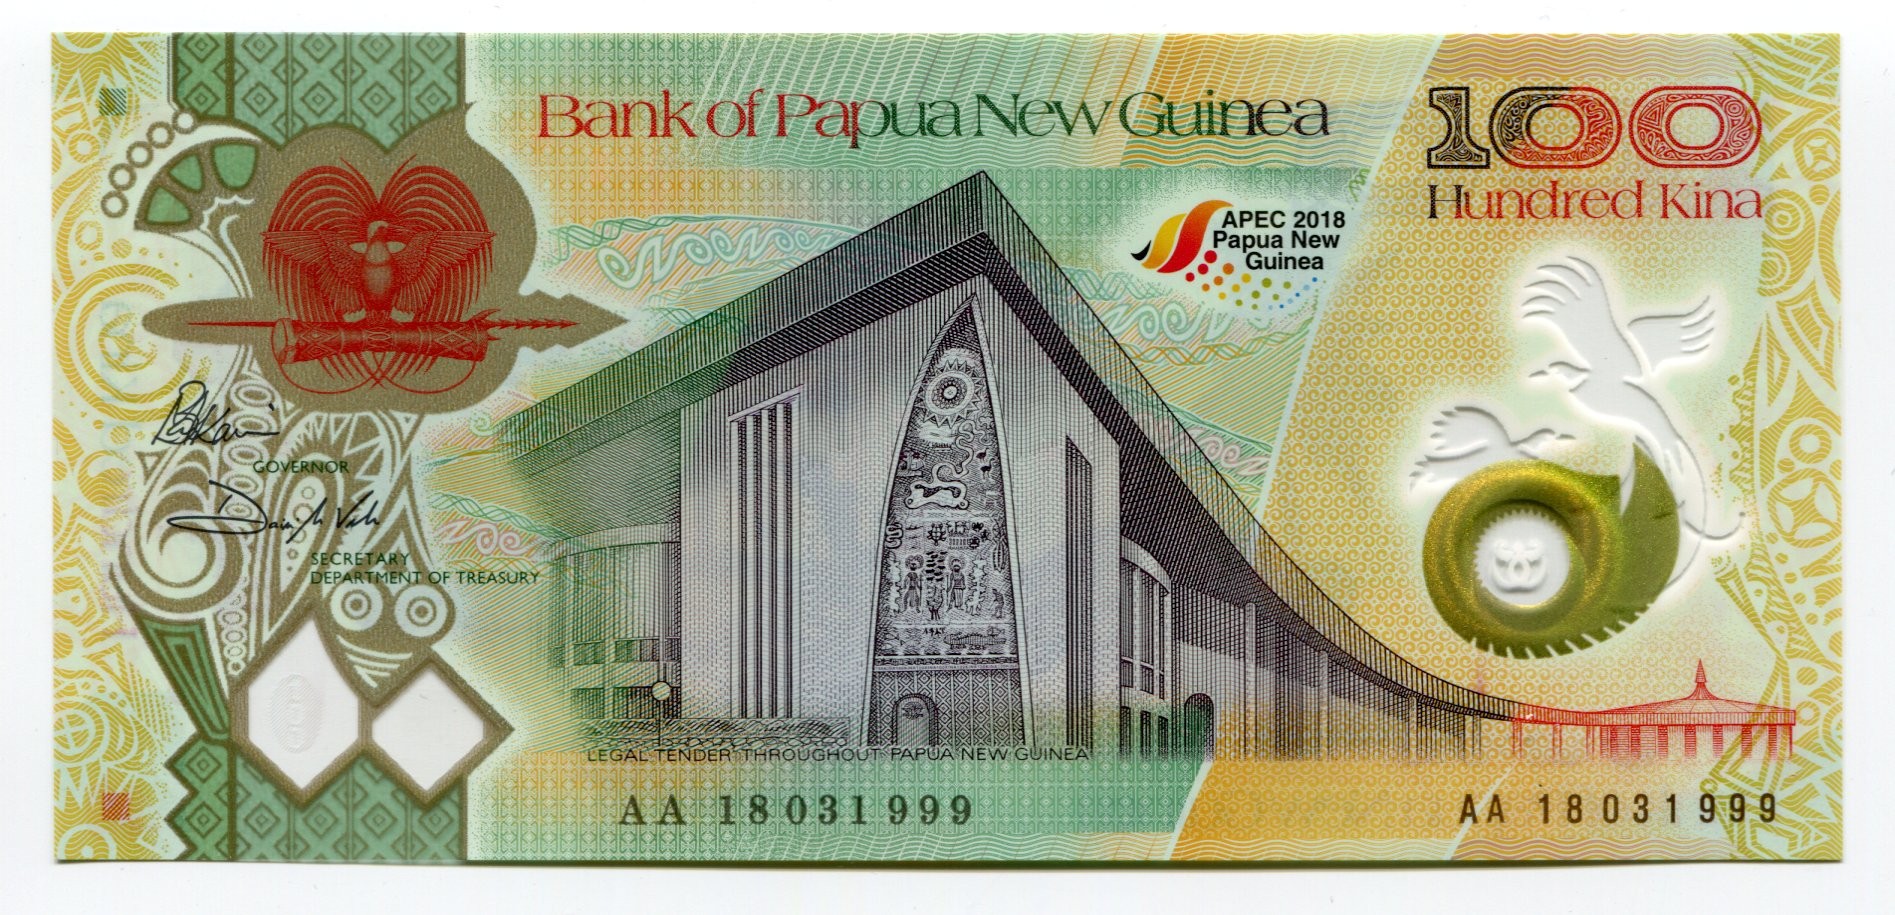 PAPUA NEW GUINEA 100 Kina 2018 APEC Port Moresby P NEW UNC Banknote 